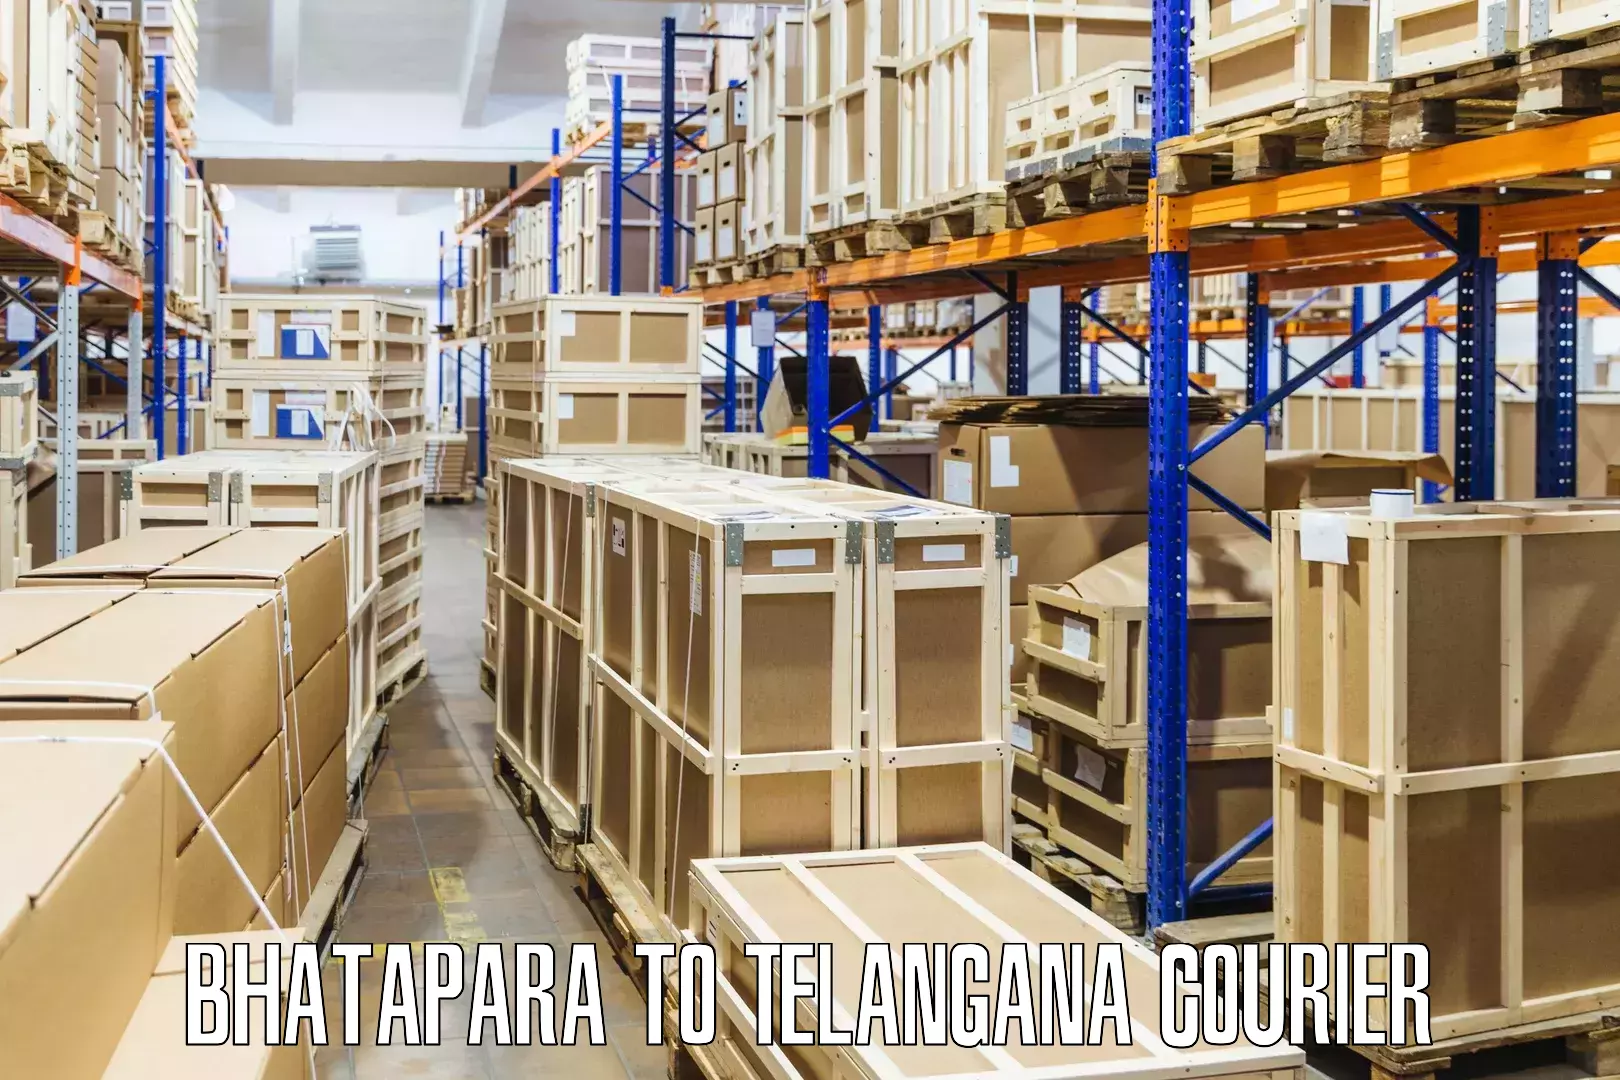 Seamless shipping experience Bhatapara to Manneguda